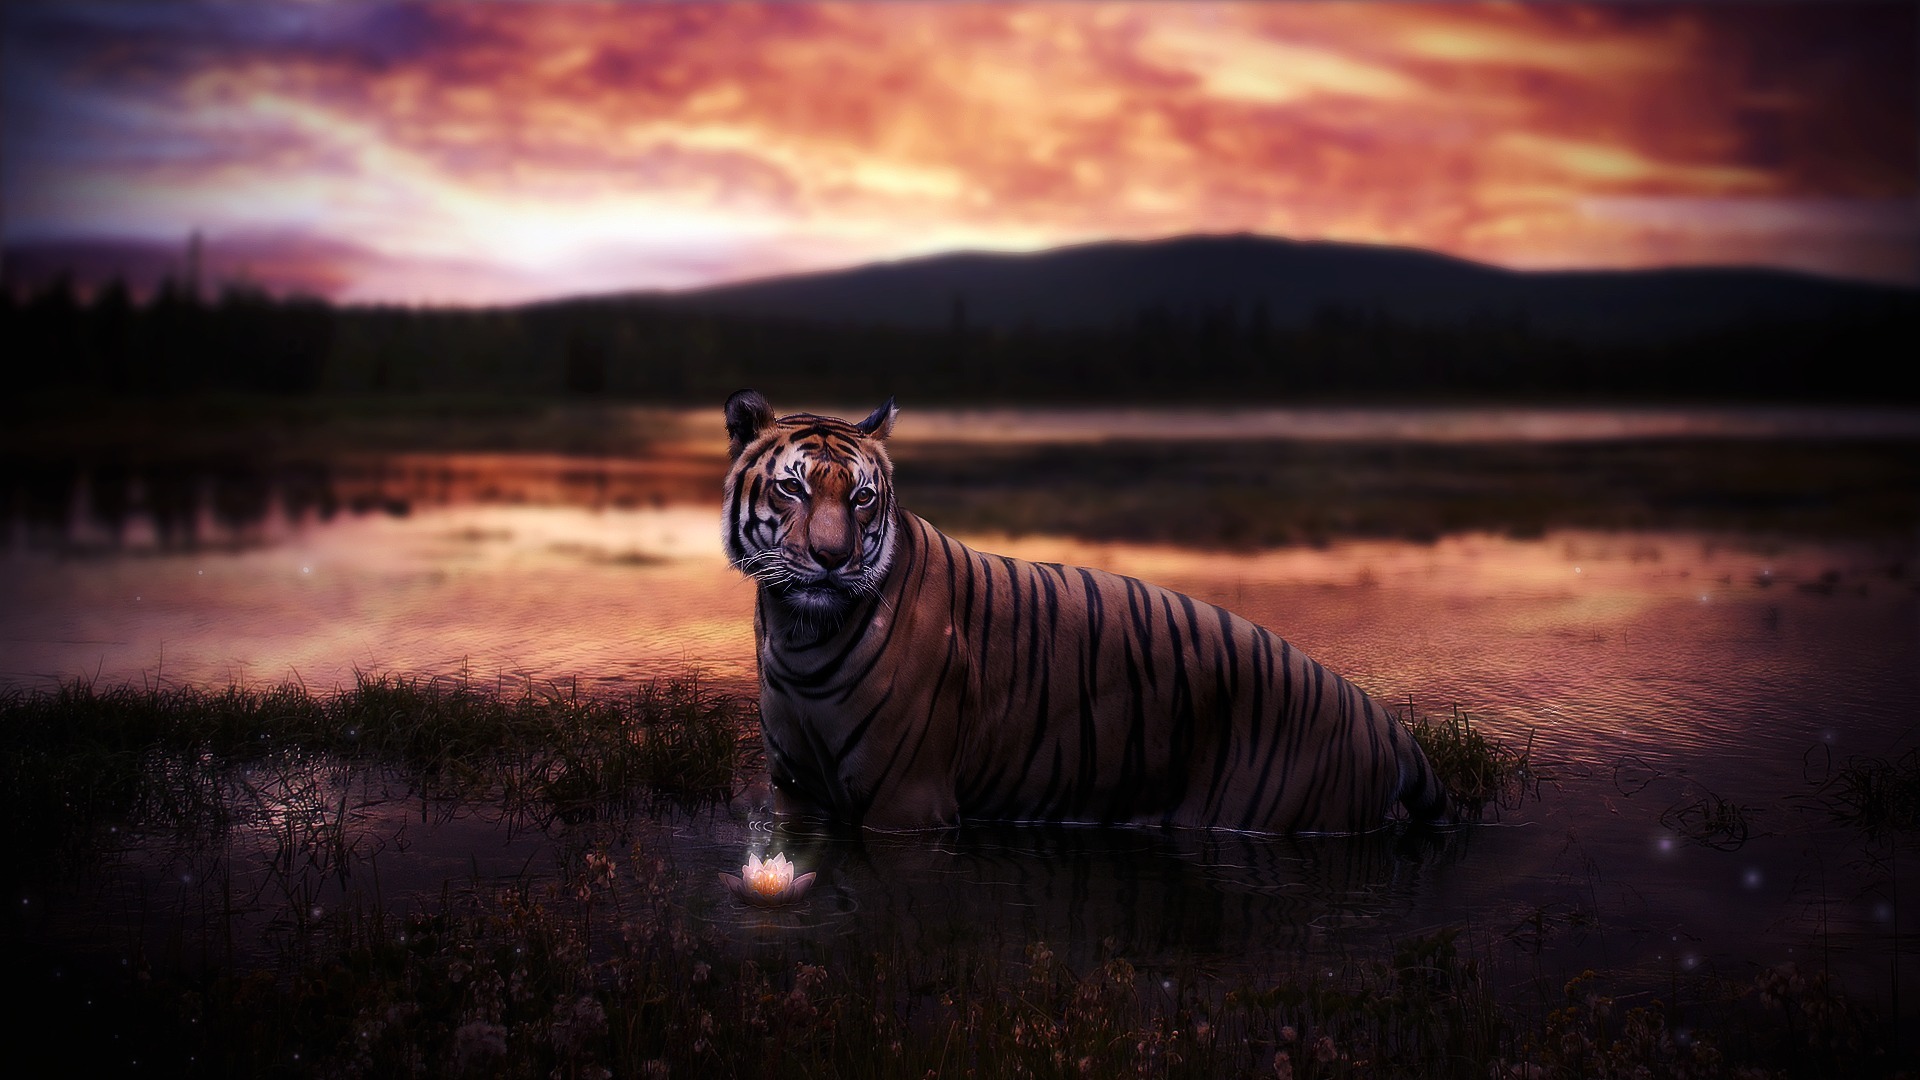 Wallpapers rendering tiger swamp on the desktop